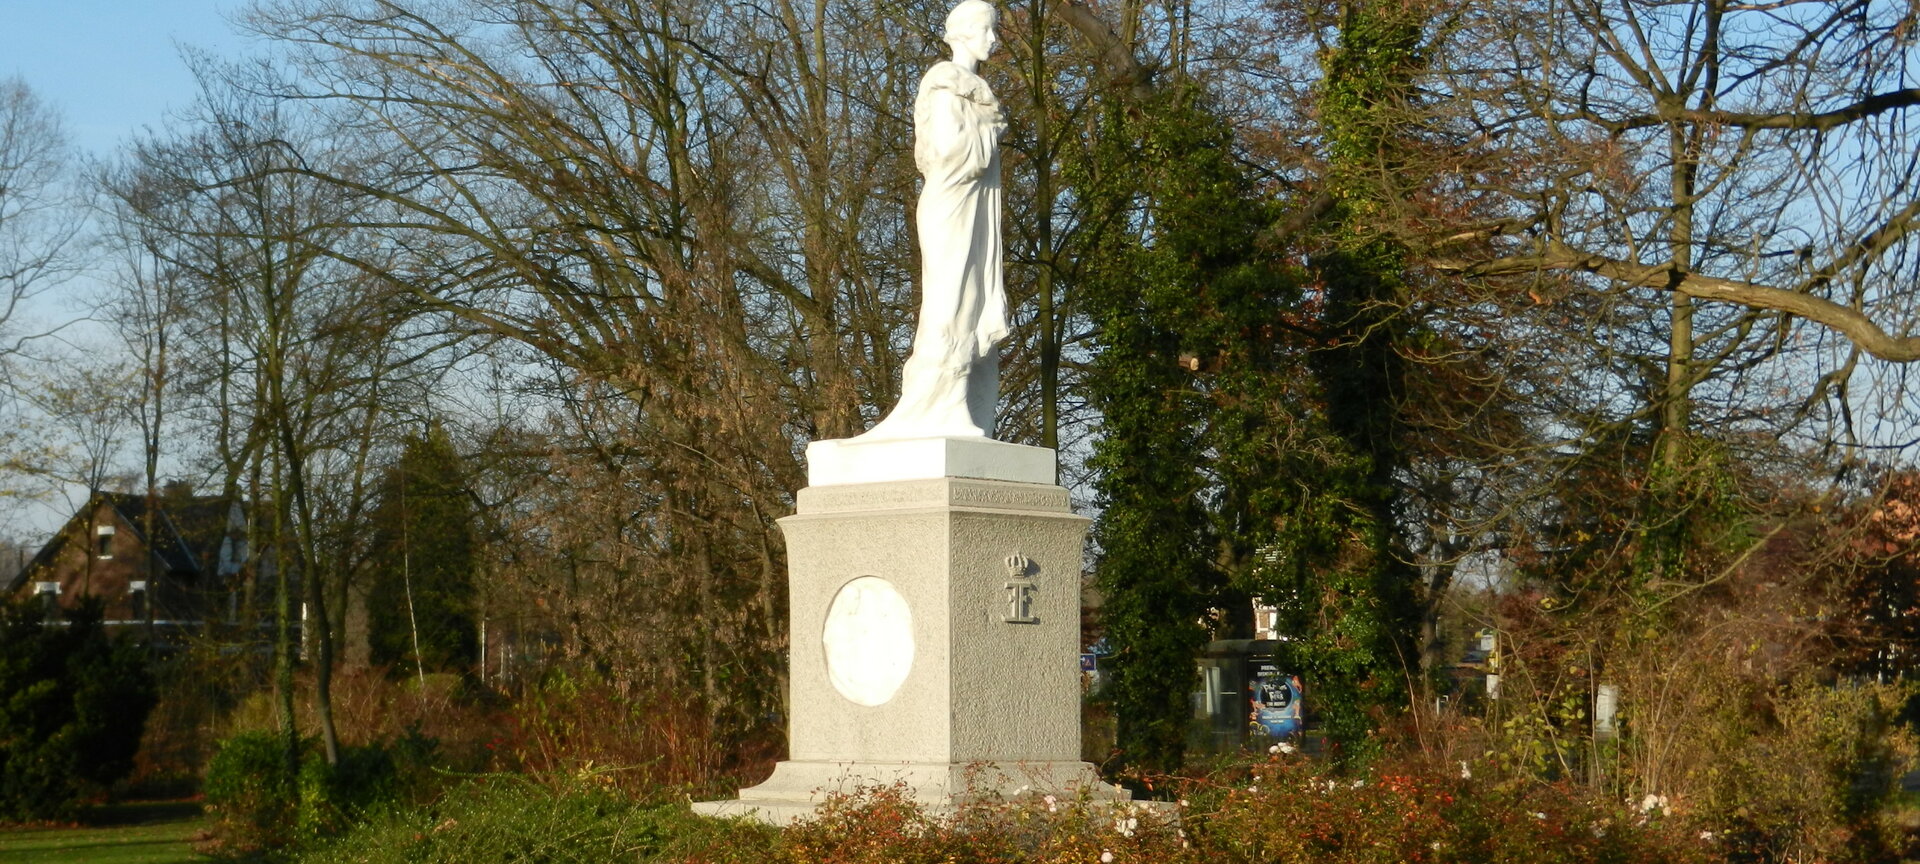 Koninginnepark met standbeeld Koningin Elisabeth en kiosk - standbeeld Sint Elisabeth in het park